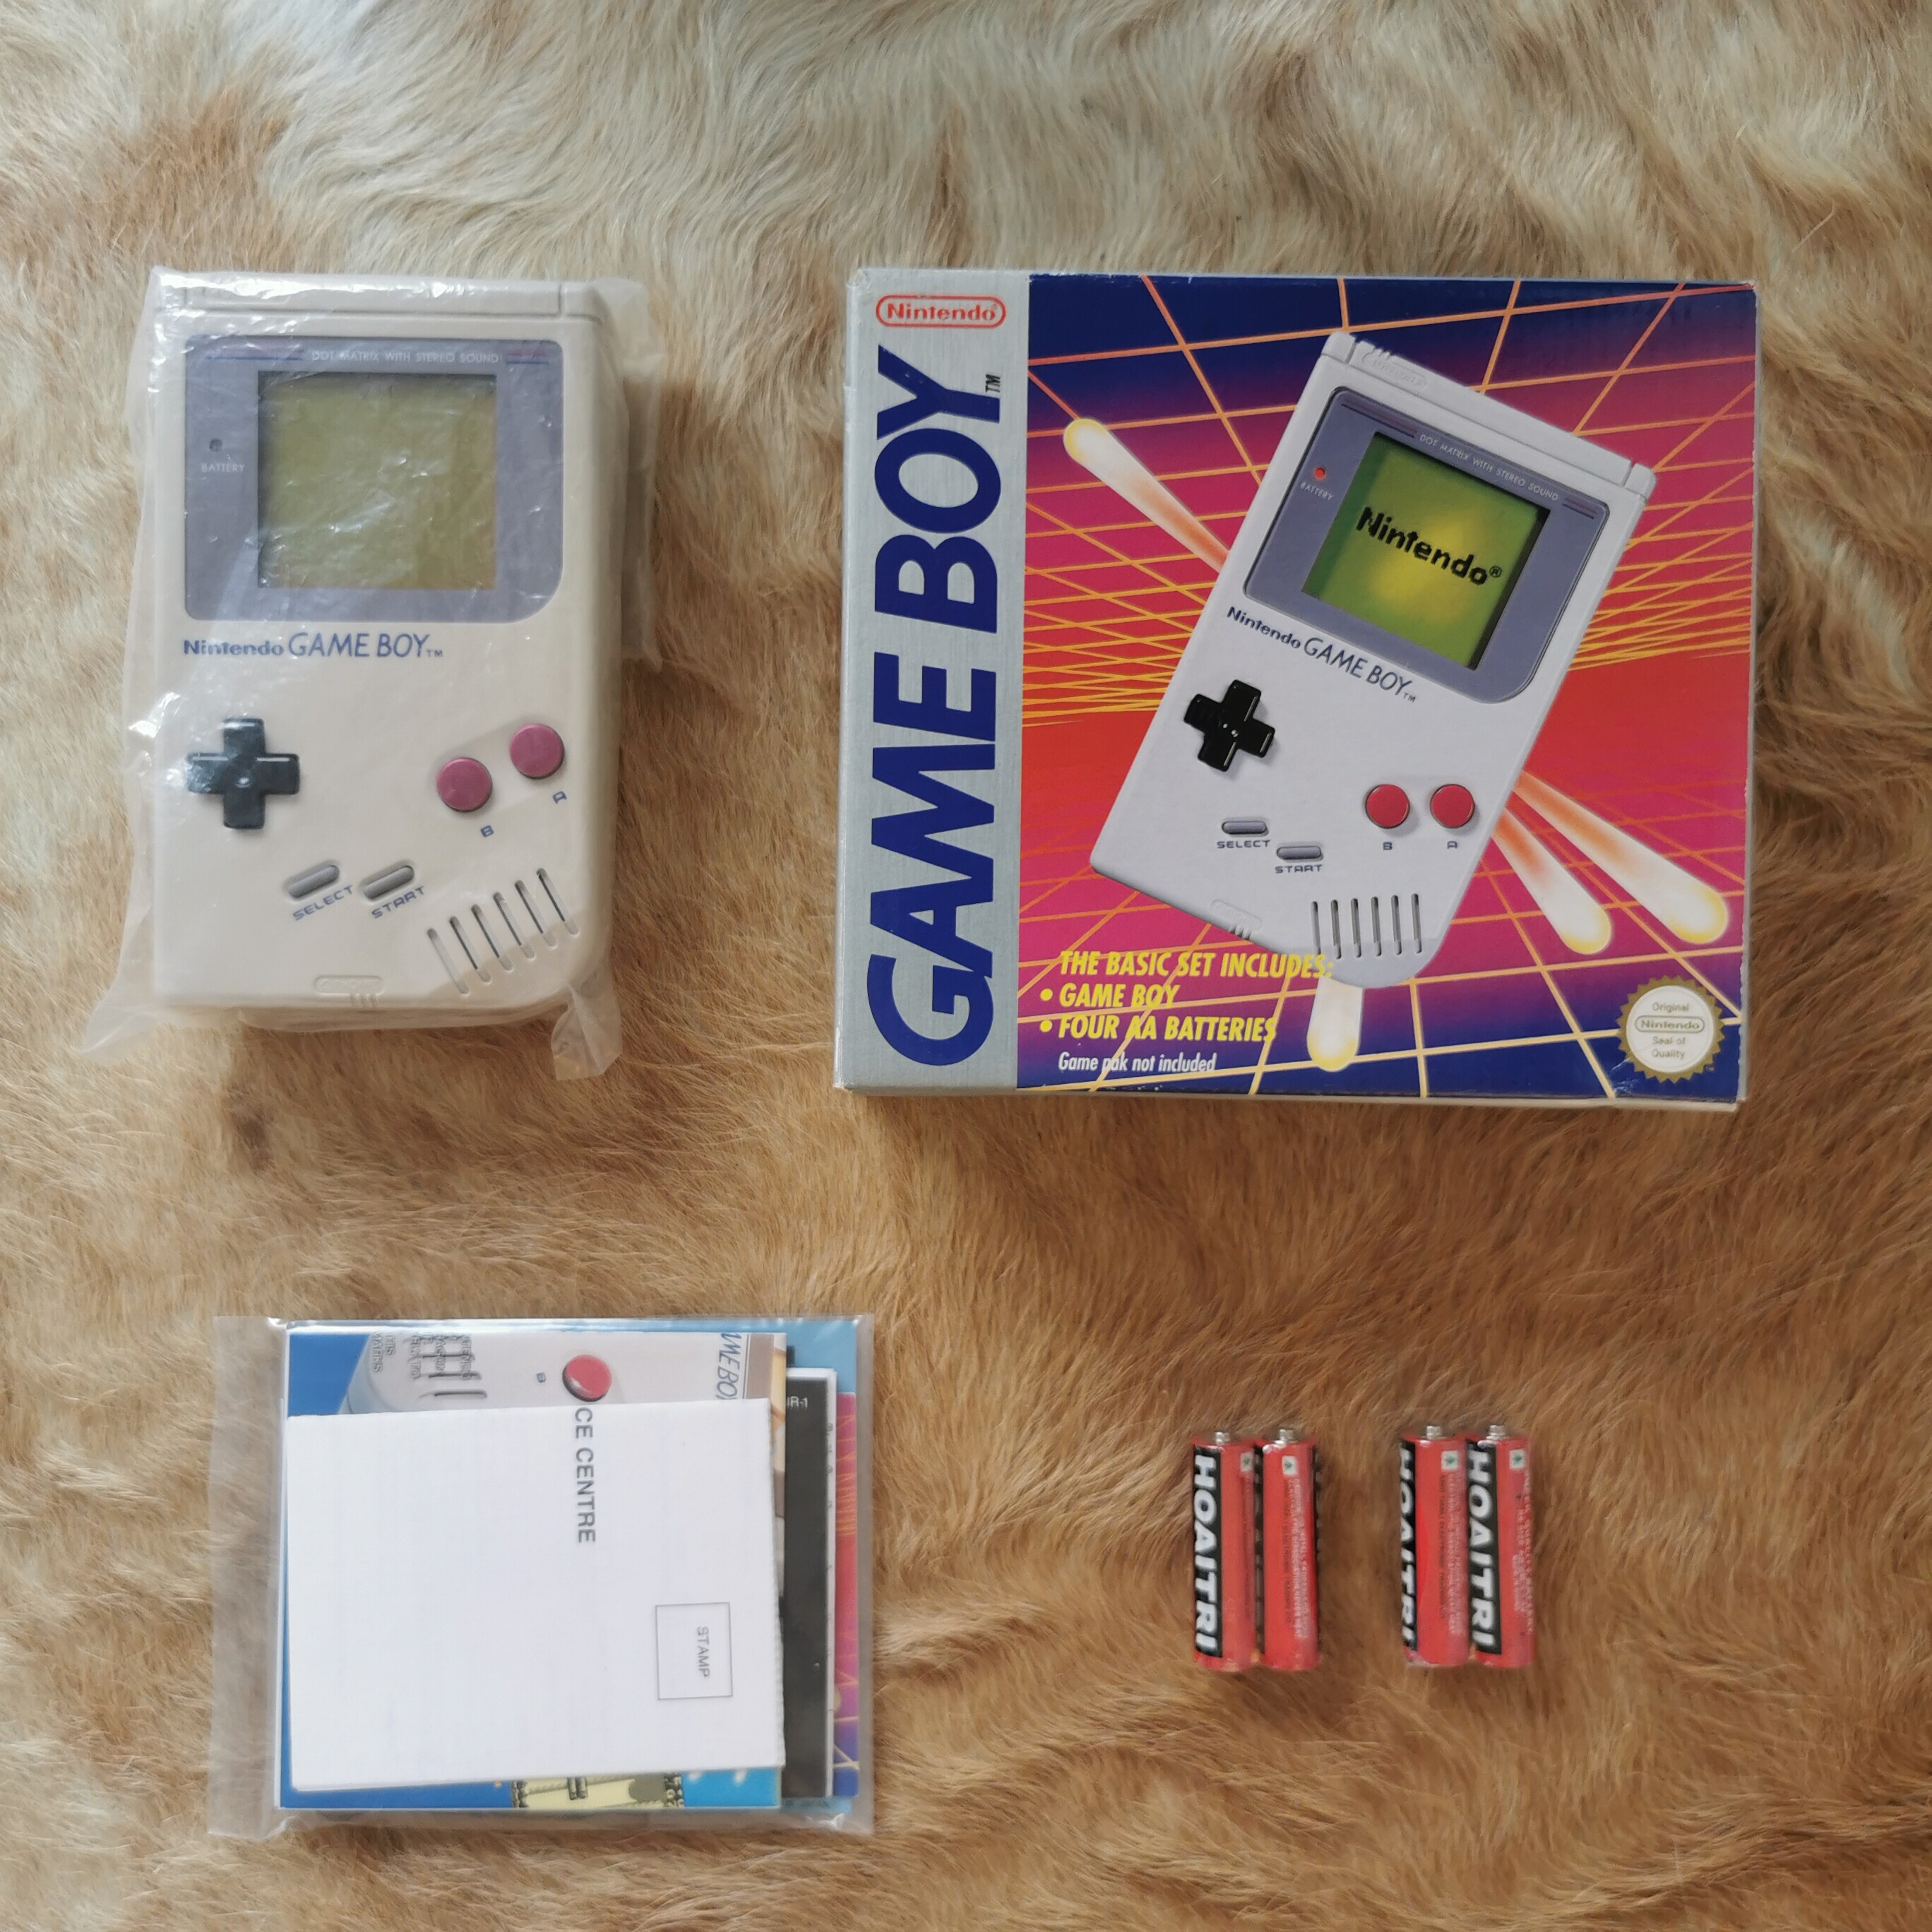  Nintendo Game Boy Console [UK]